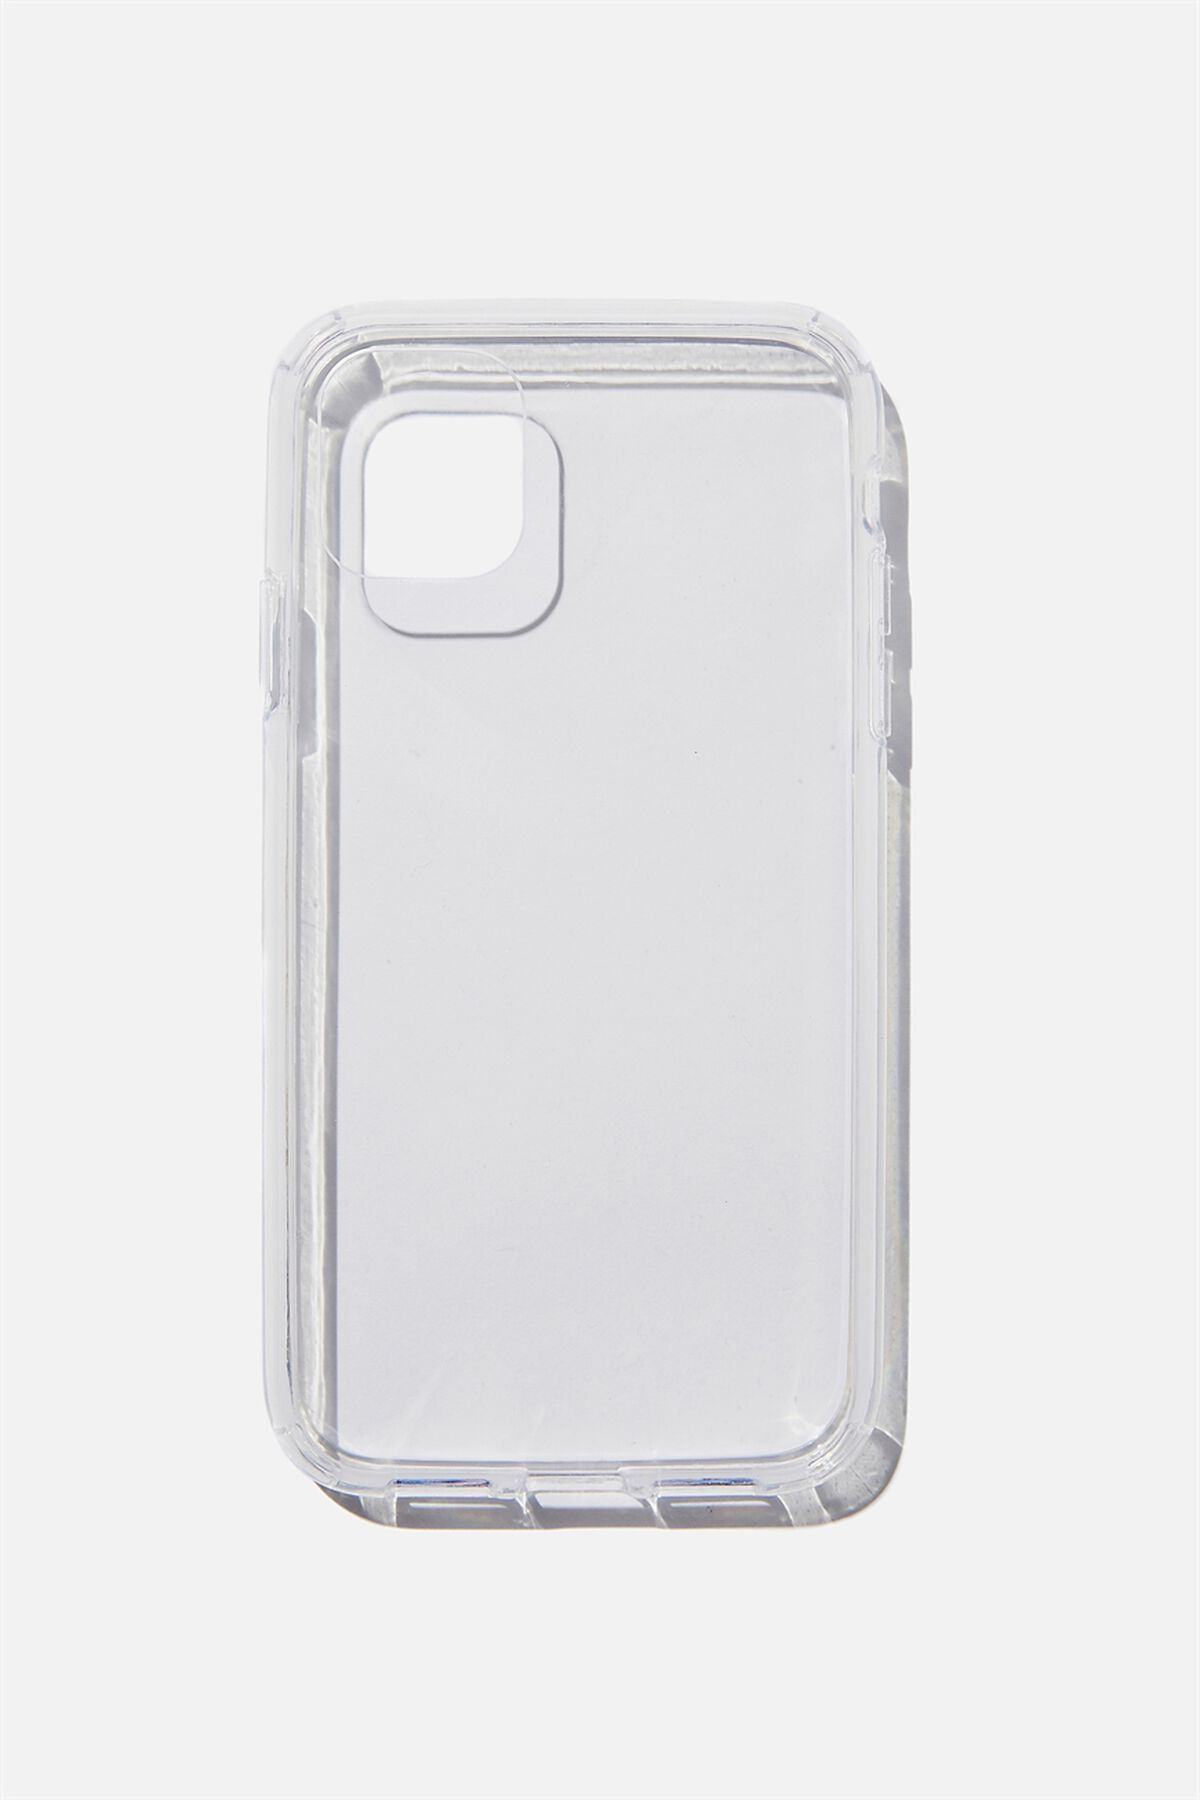 iPhone 11 Compatible Phone Cases | Typo